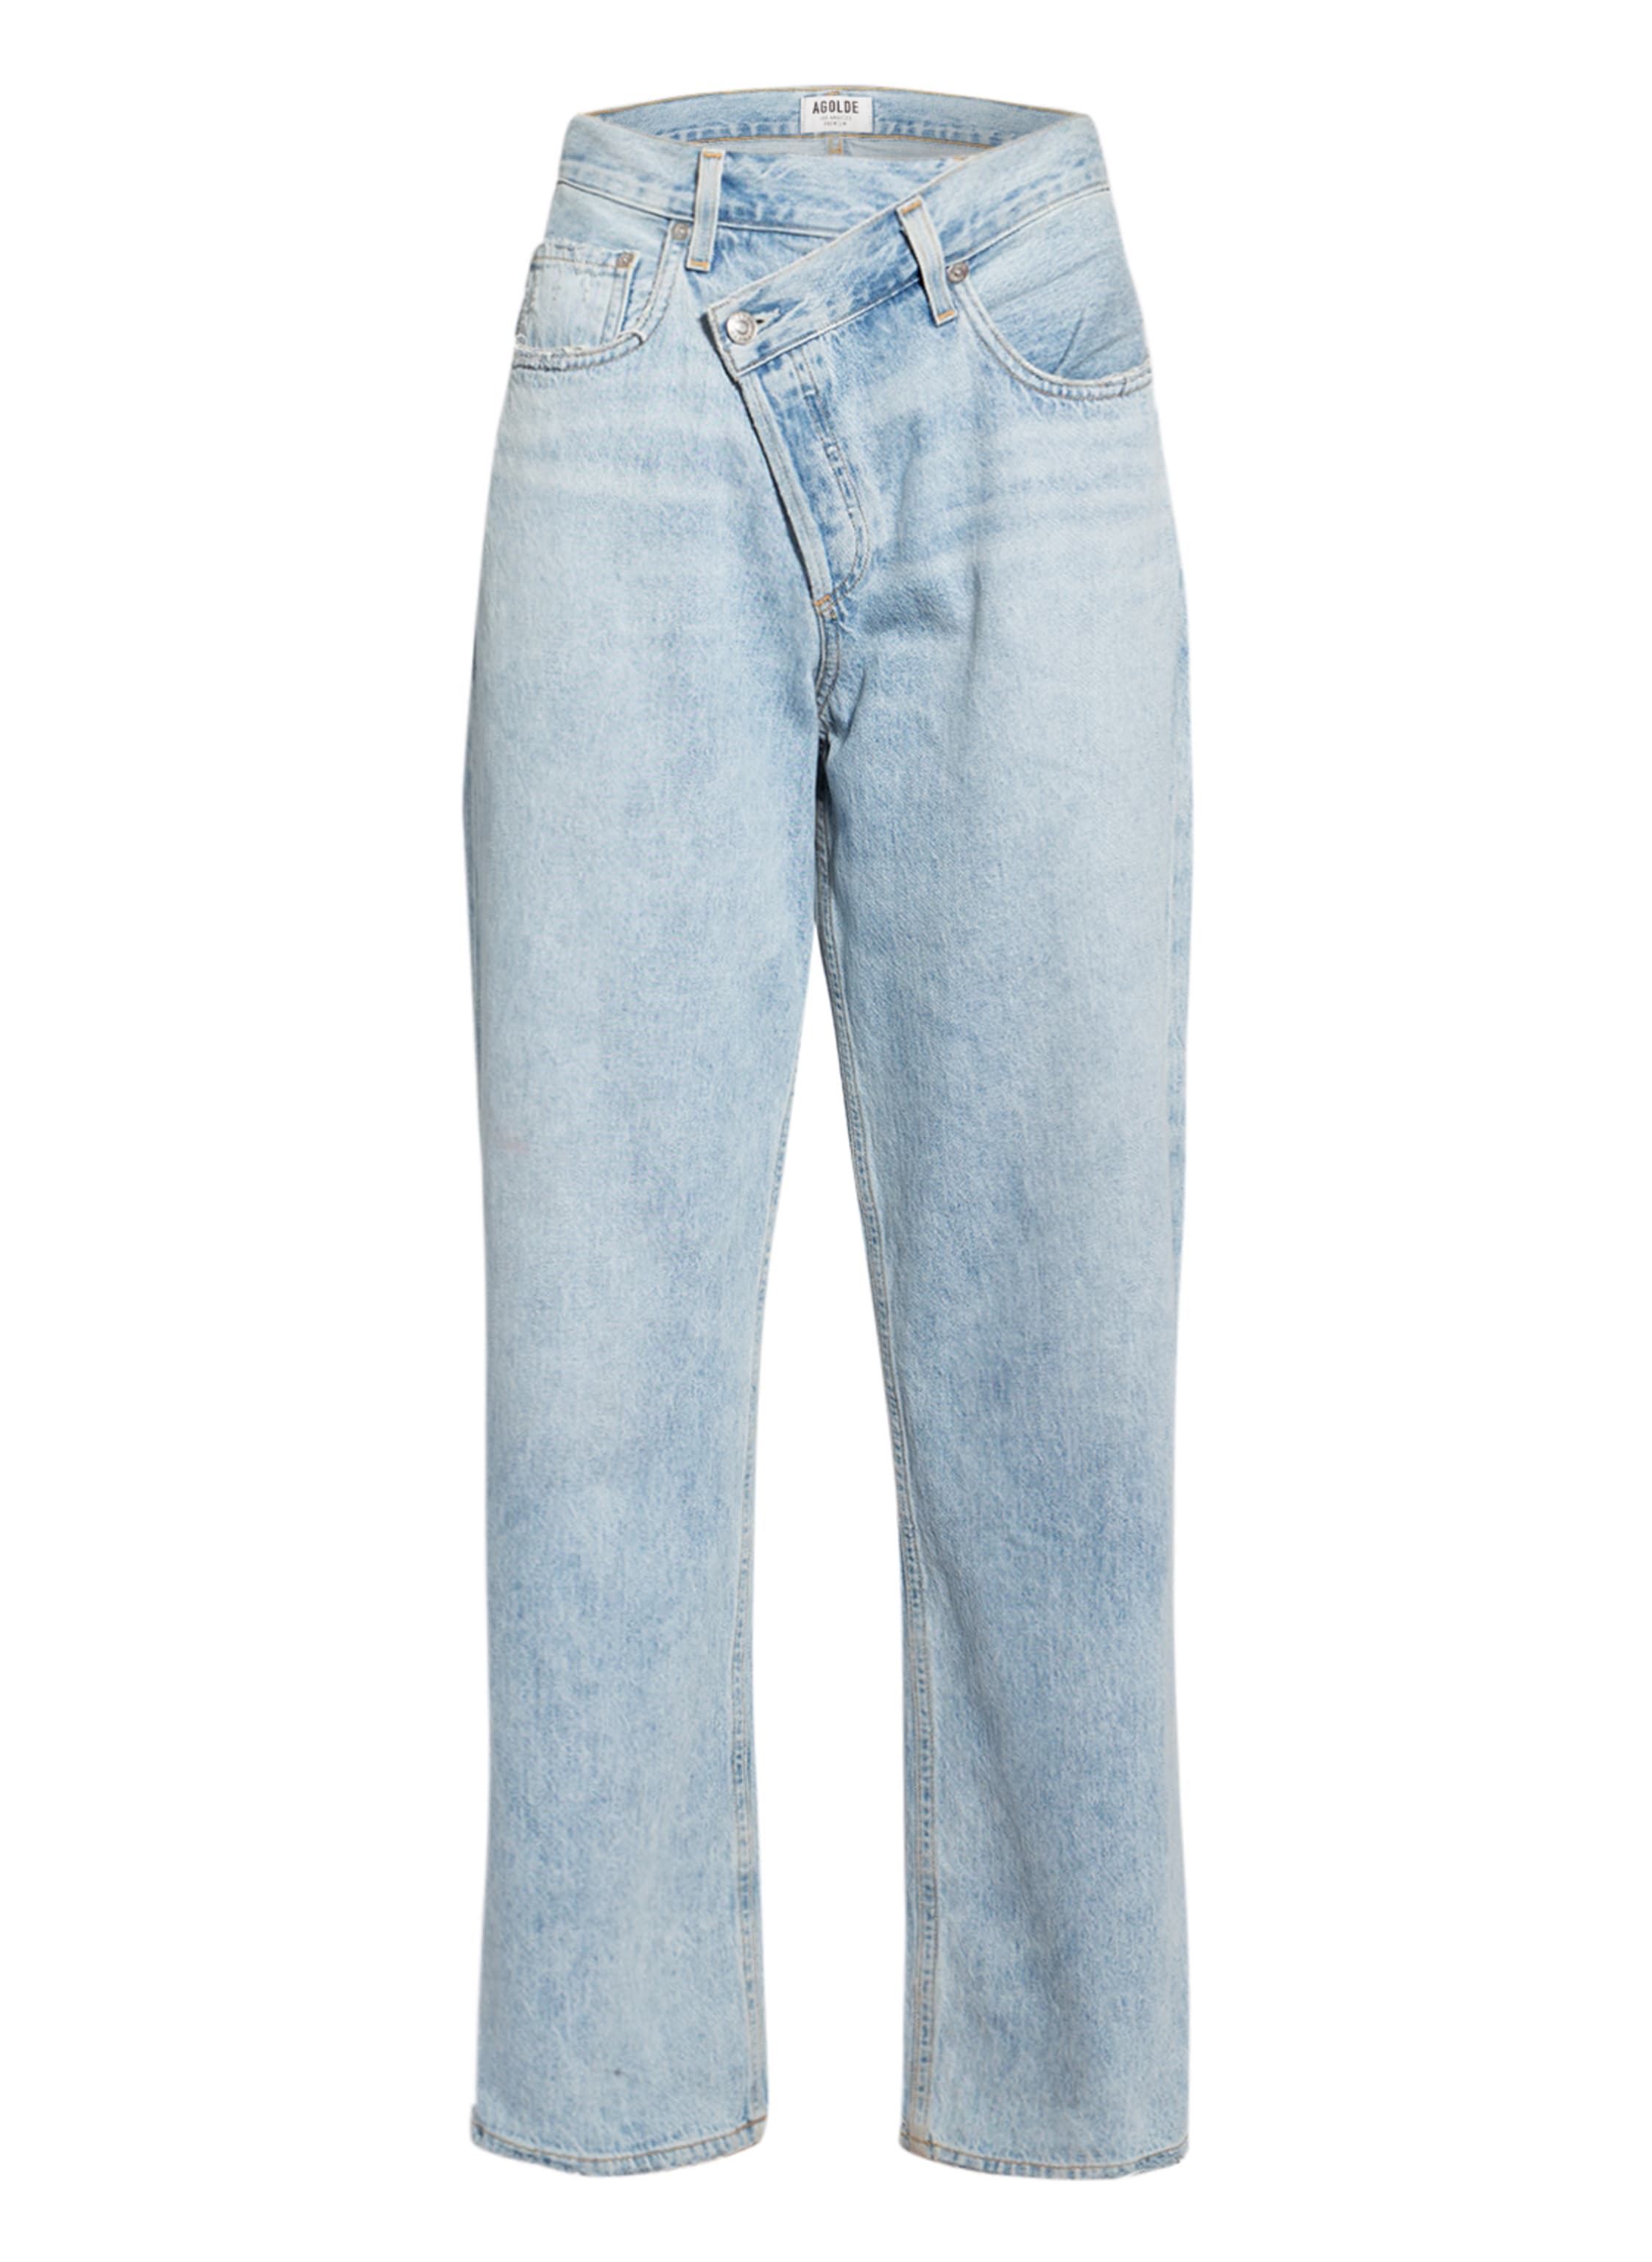 AGOLDE Jeans CRISS CROSS in suburbia suburbia | Breuninger